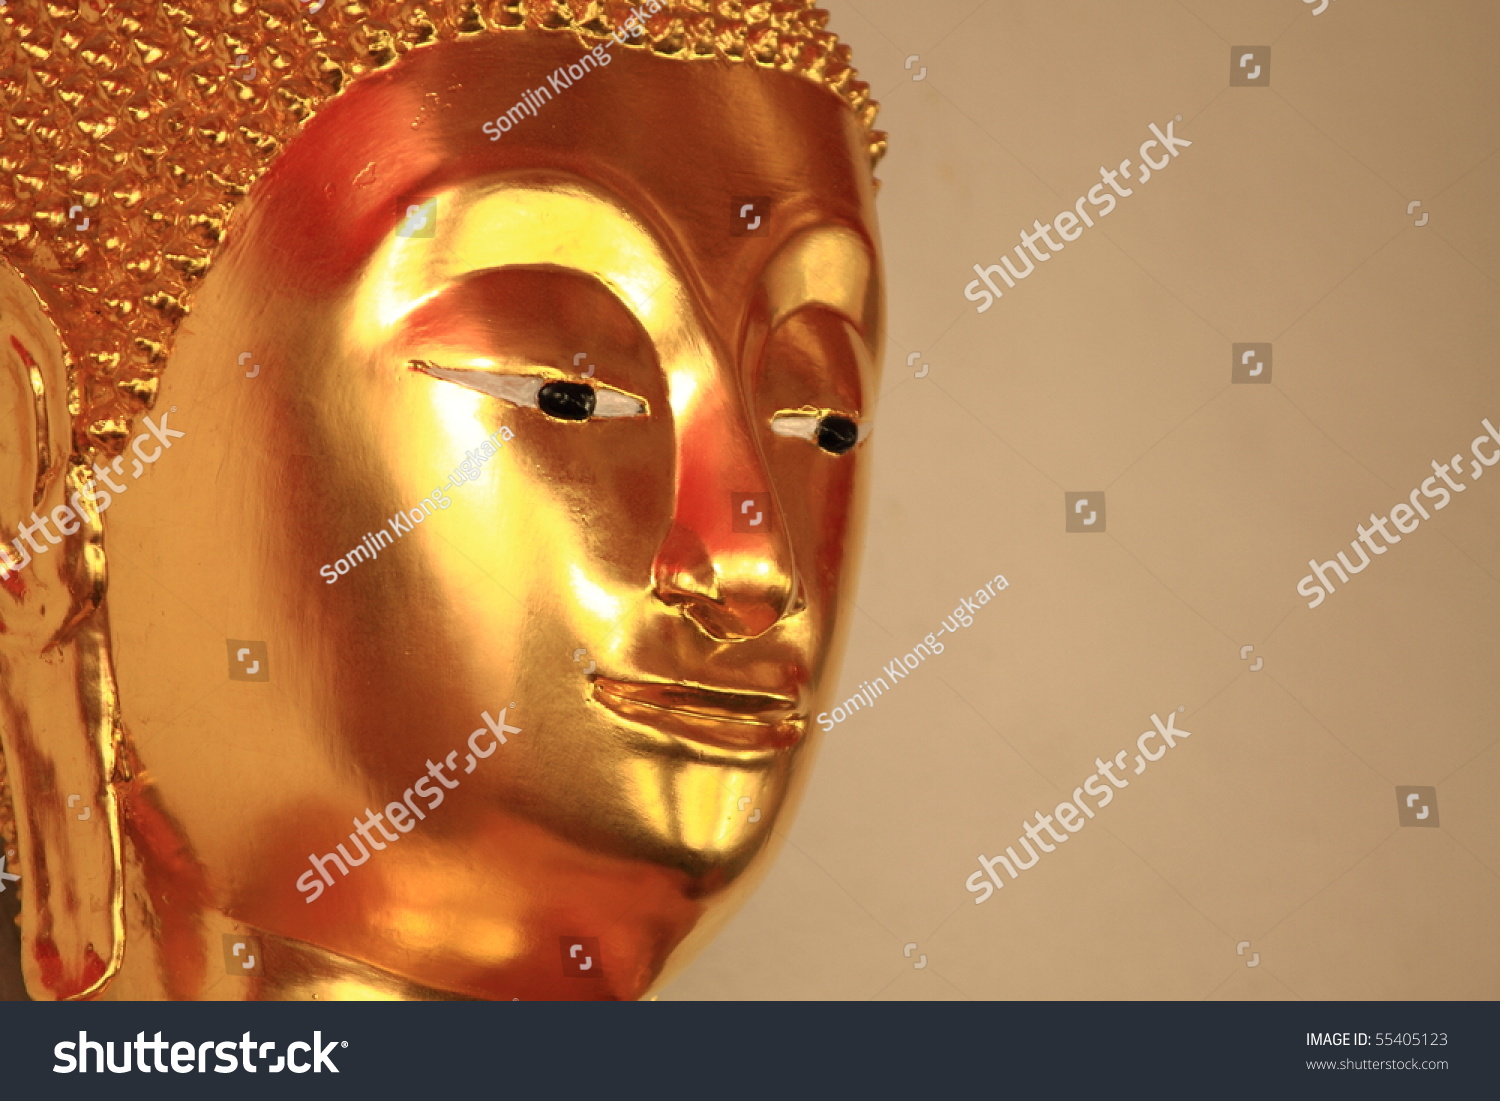 Gold Buddha image #55405123